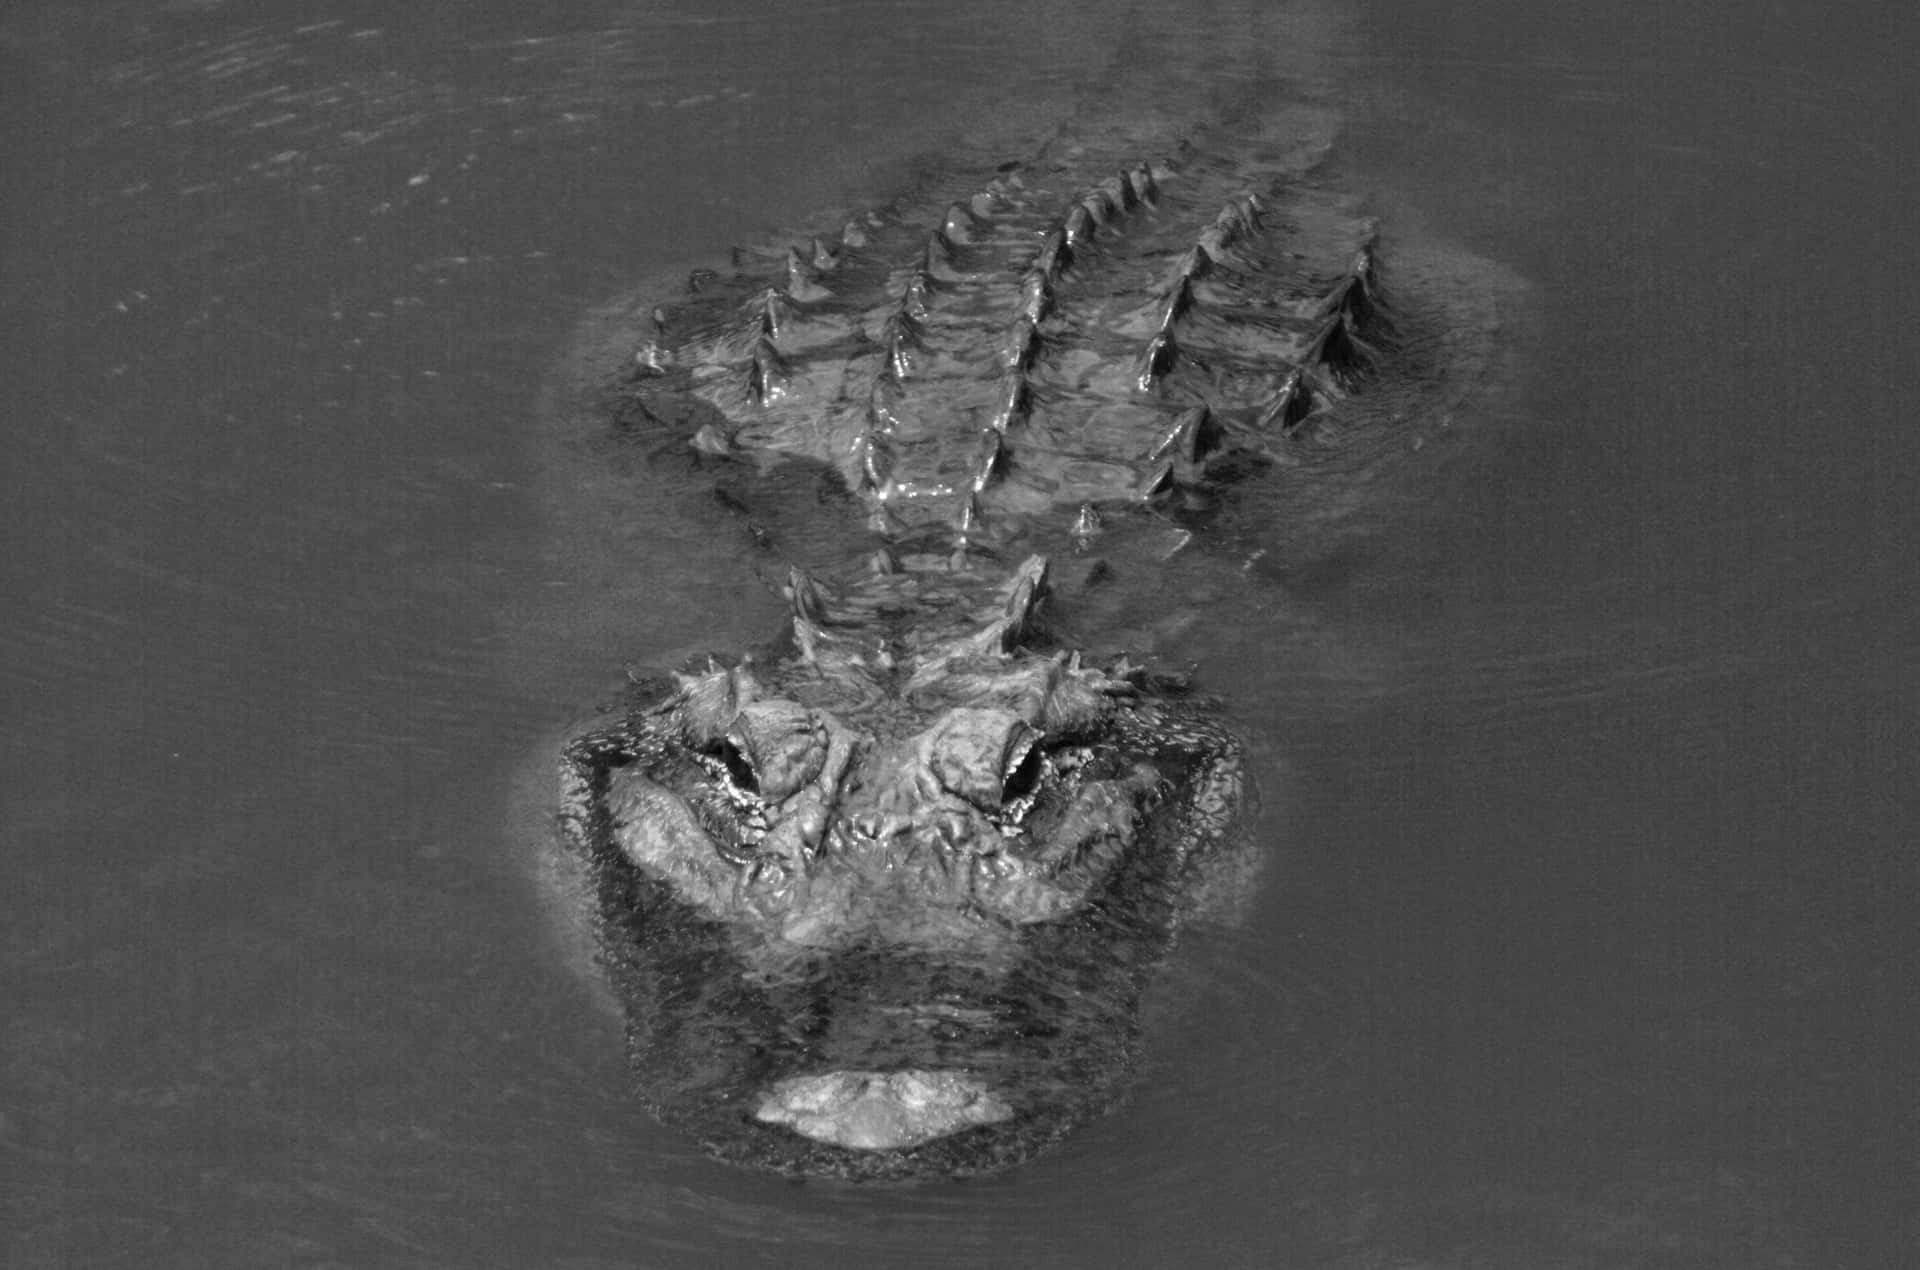 An Alligator Eyeing Its Prey